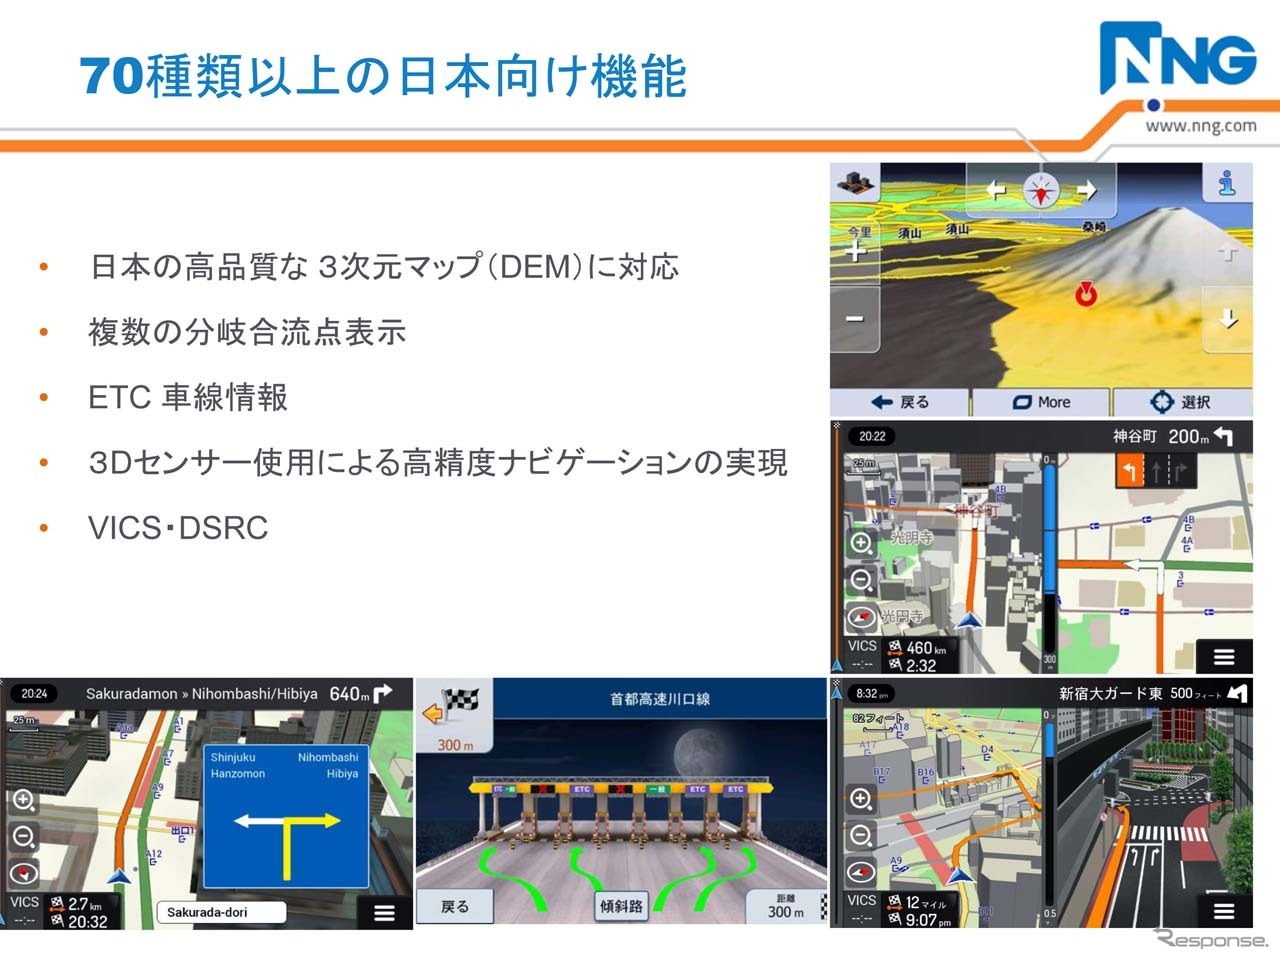 NNGは日本市場向けに70種類以上の機能を準備しているという